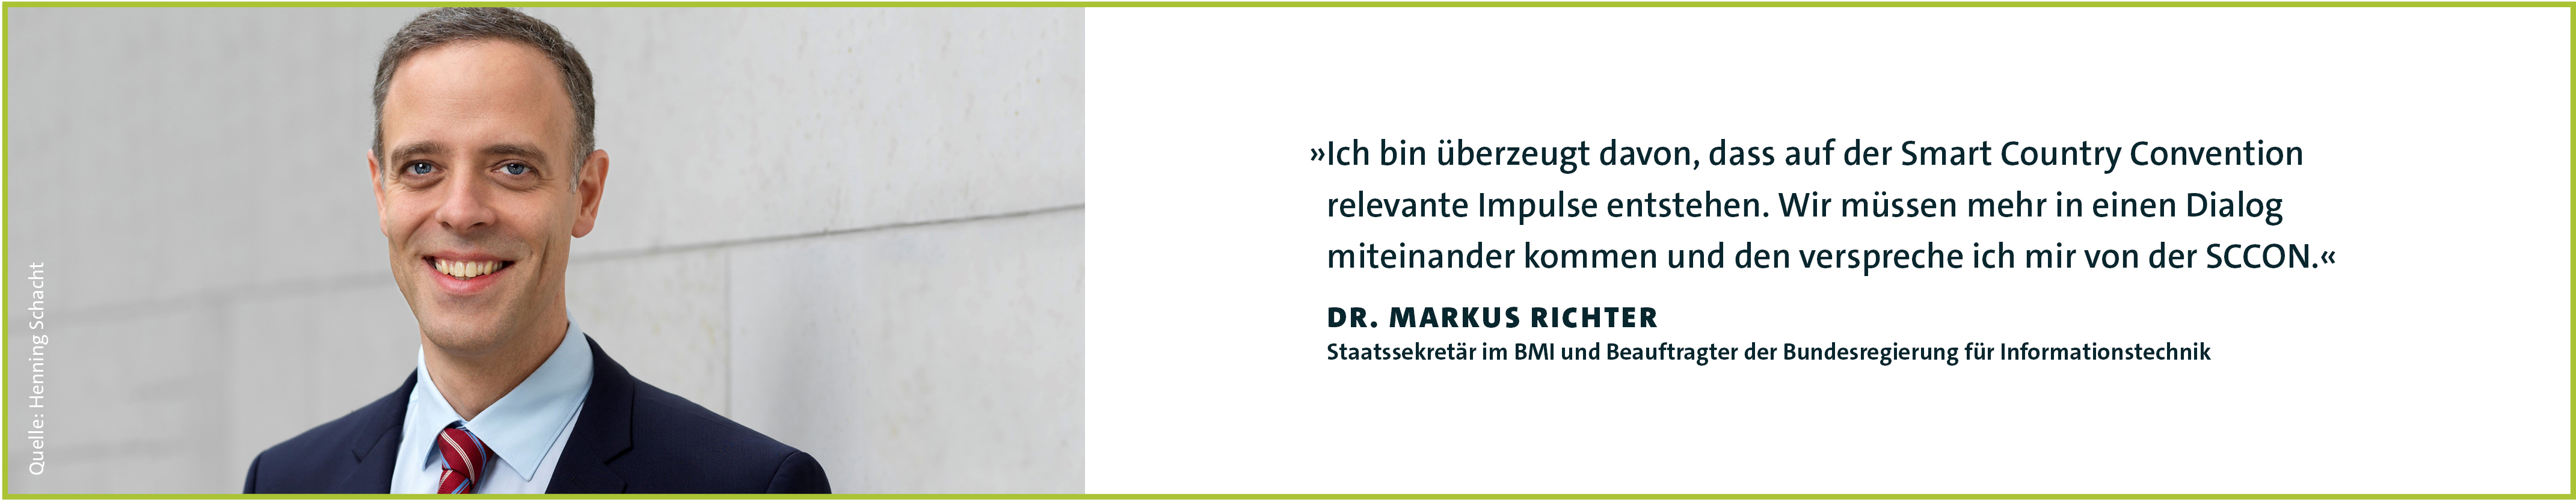 Dr. Markus Richter